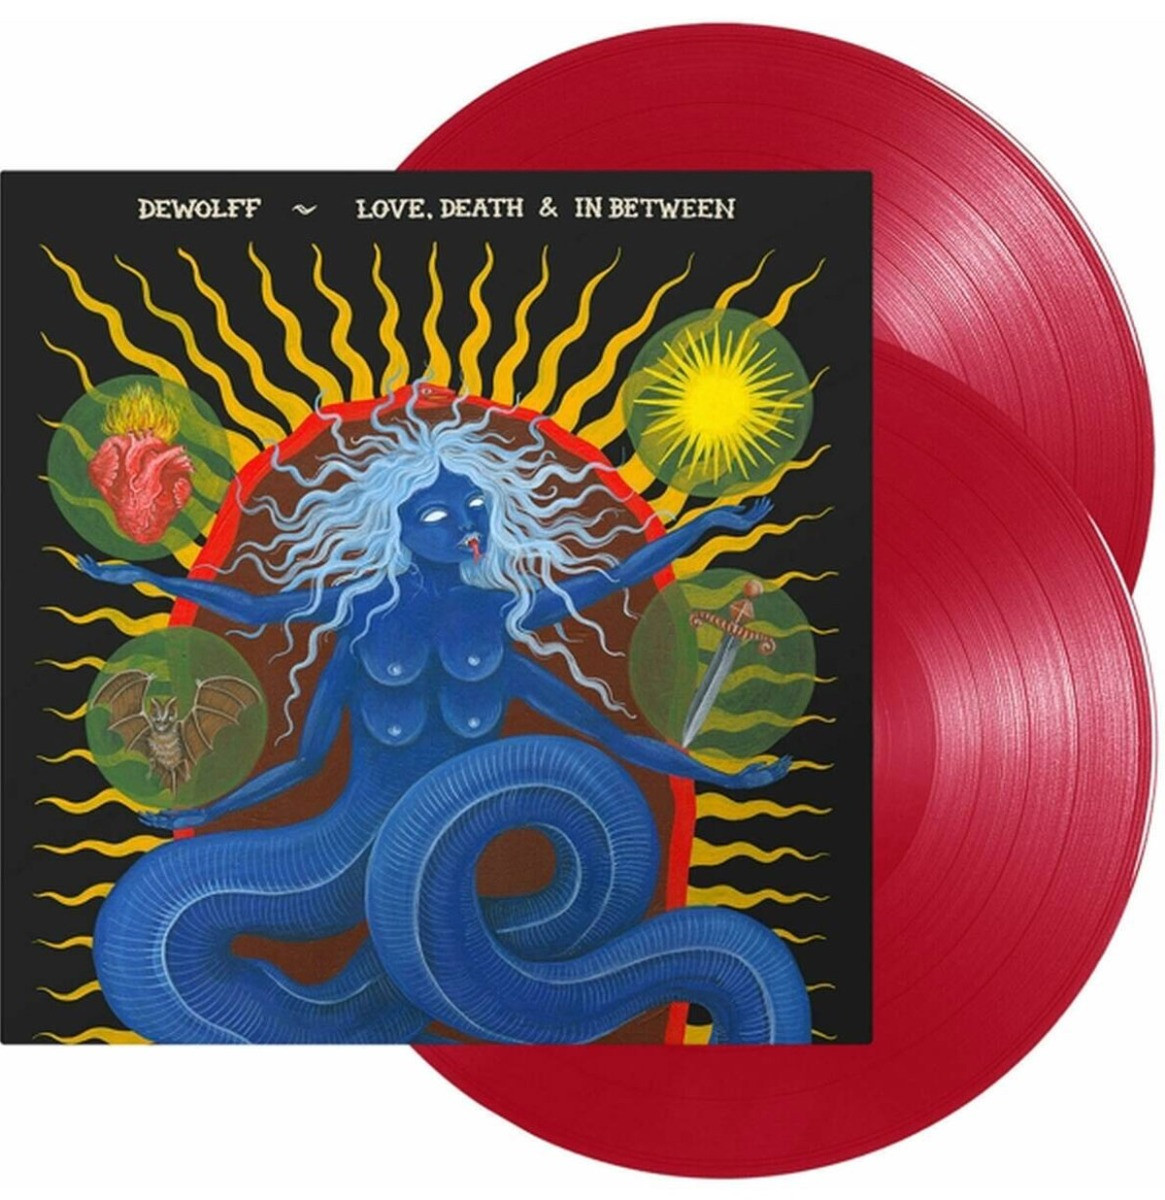 Dewolff - Love, Death & In Between Limited Edition Red Vinyl 2LP